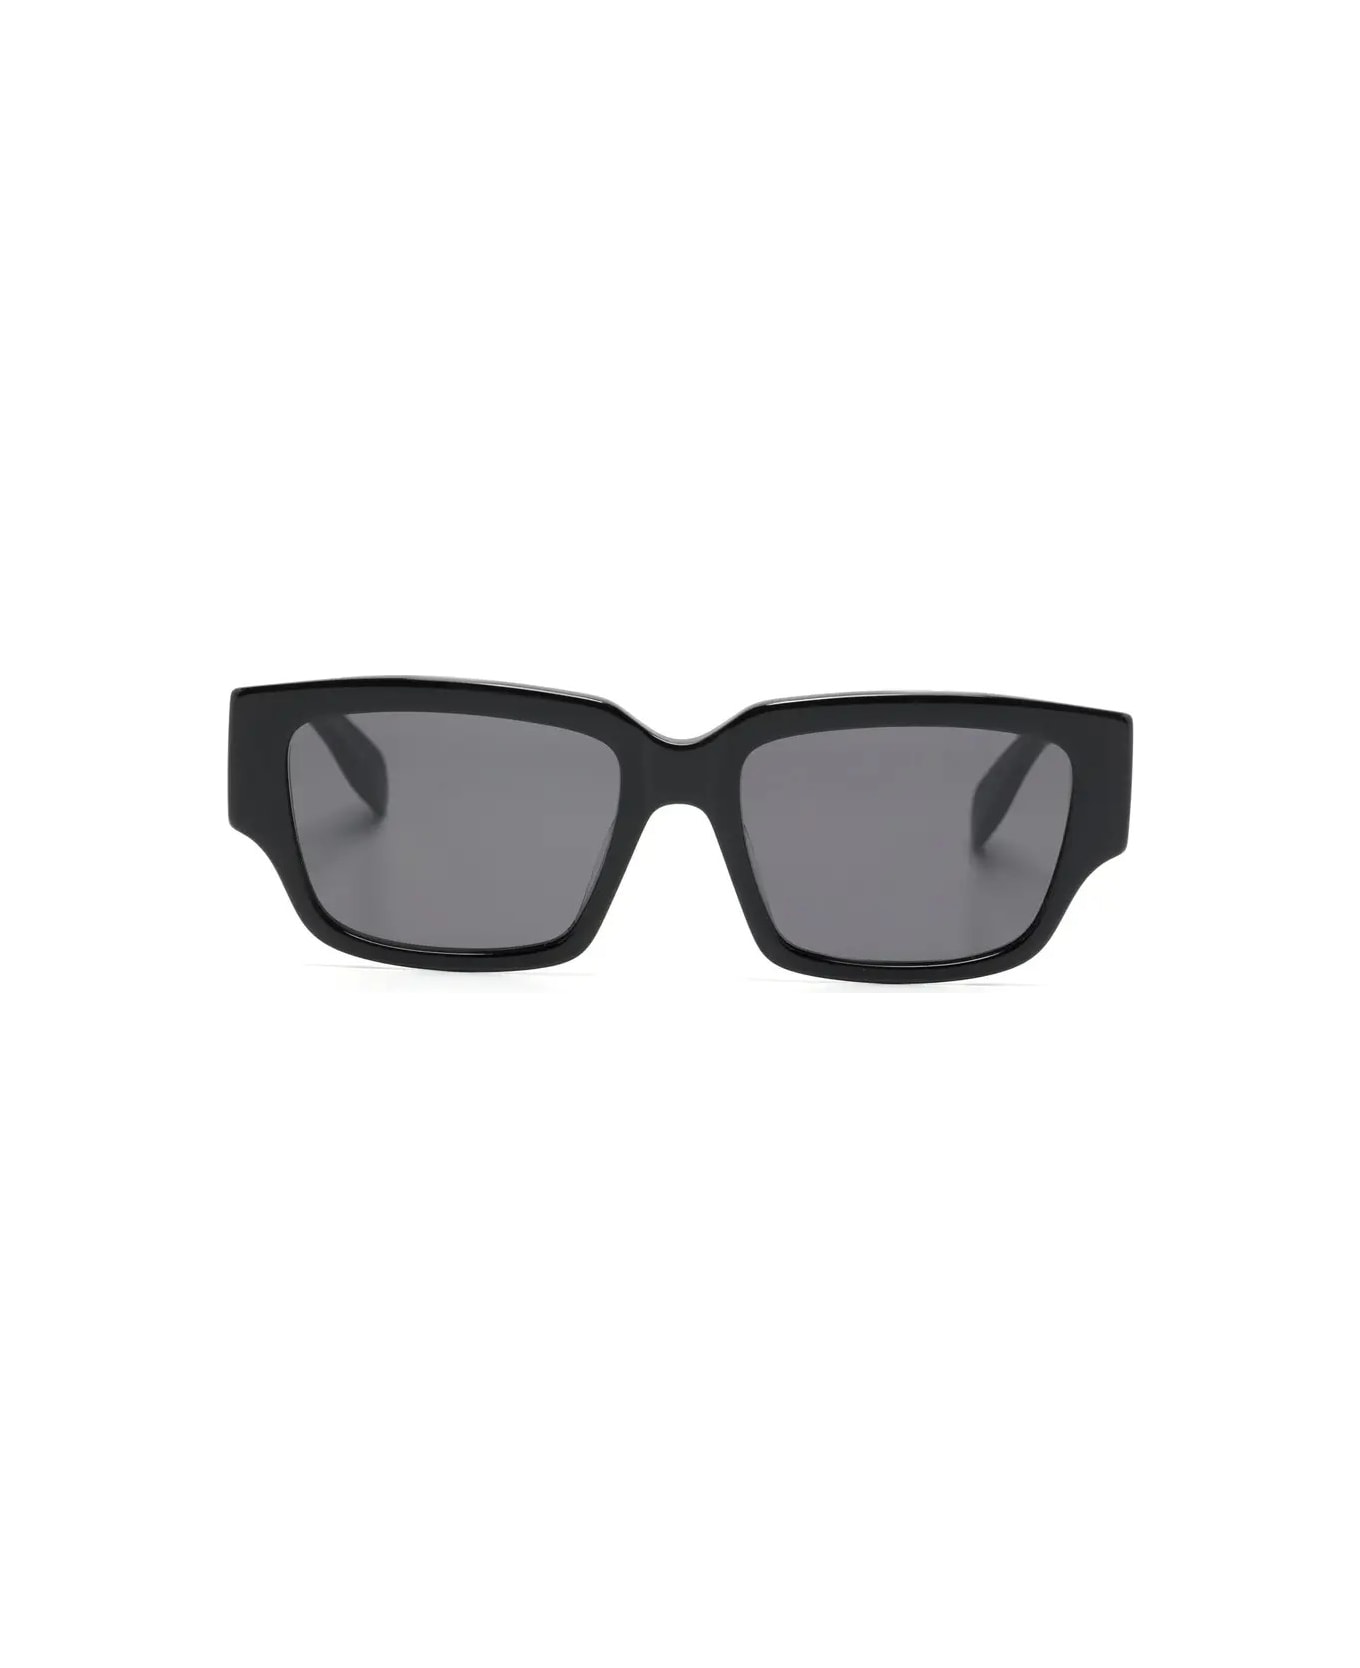 Alexander McQueen Mcqueen Graffiti Rectangular Sunglasses In Black And Red - Black